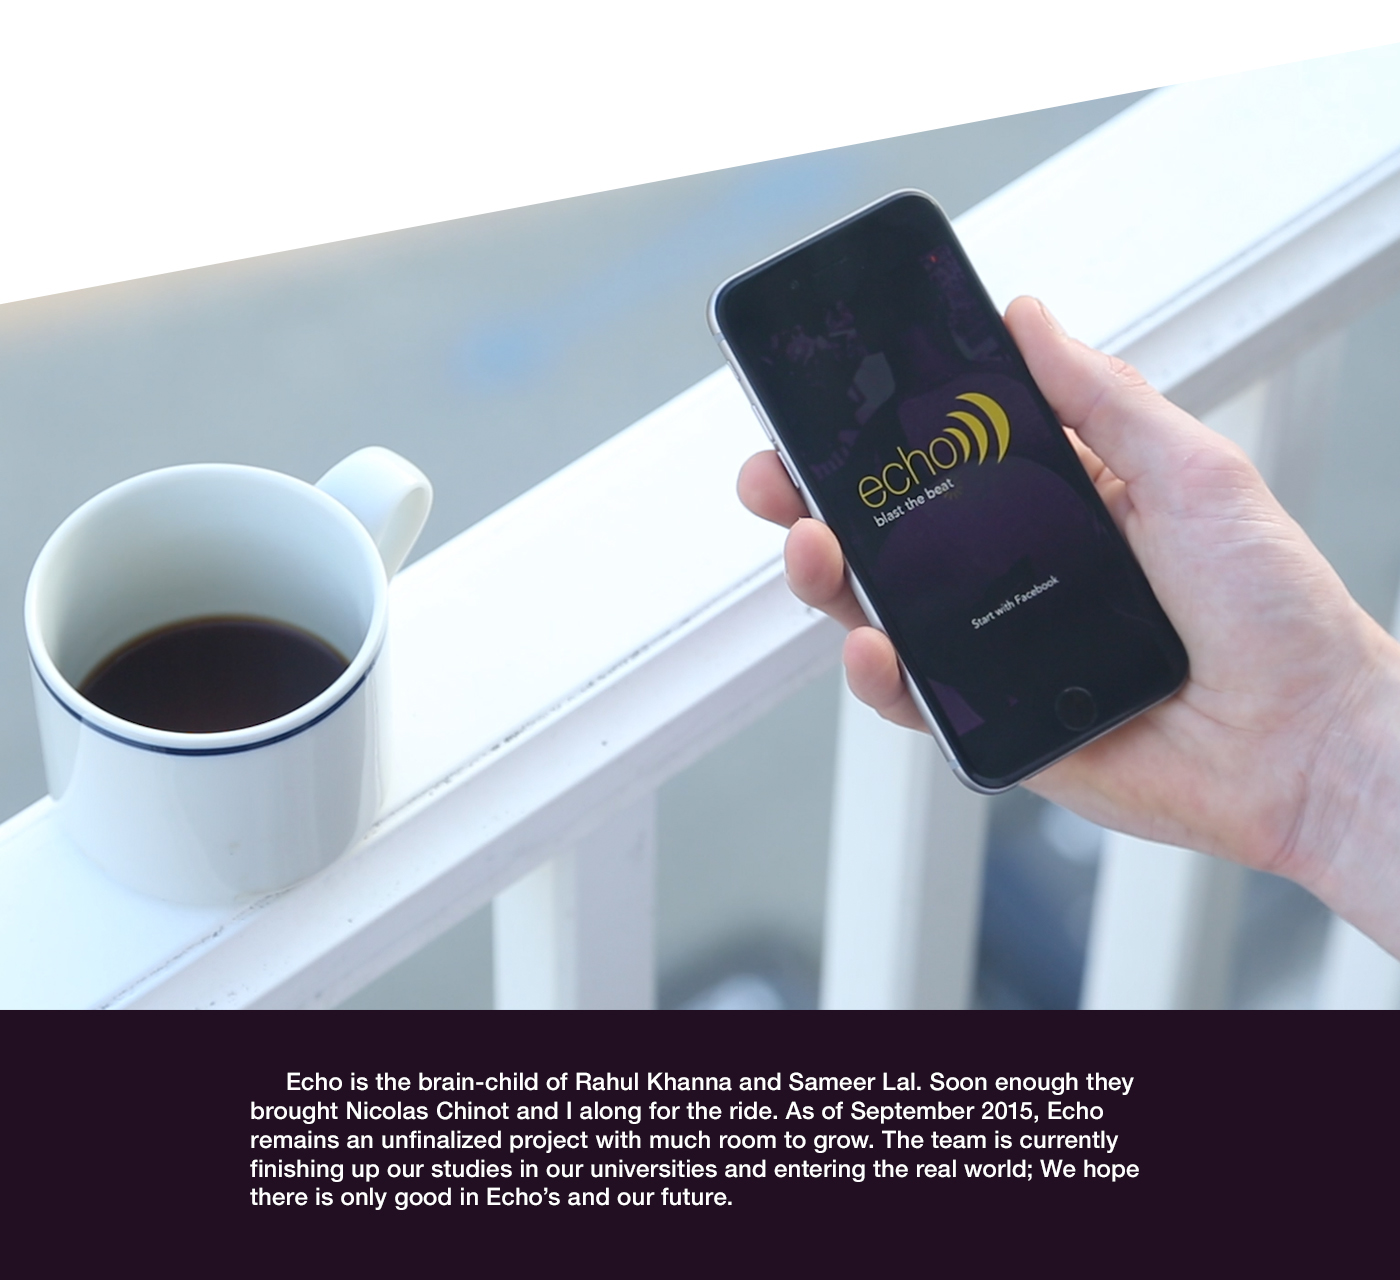 echo purple gold share music app ios application music discovery spotify soundcloud pandora